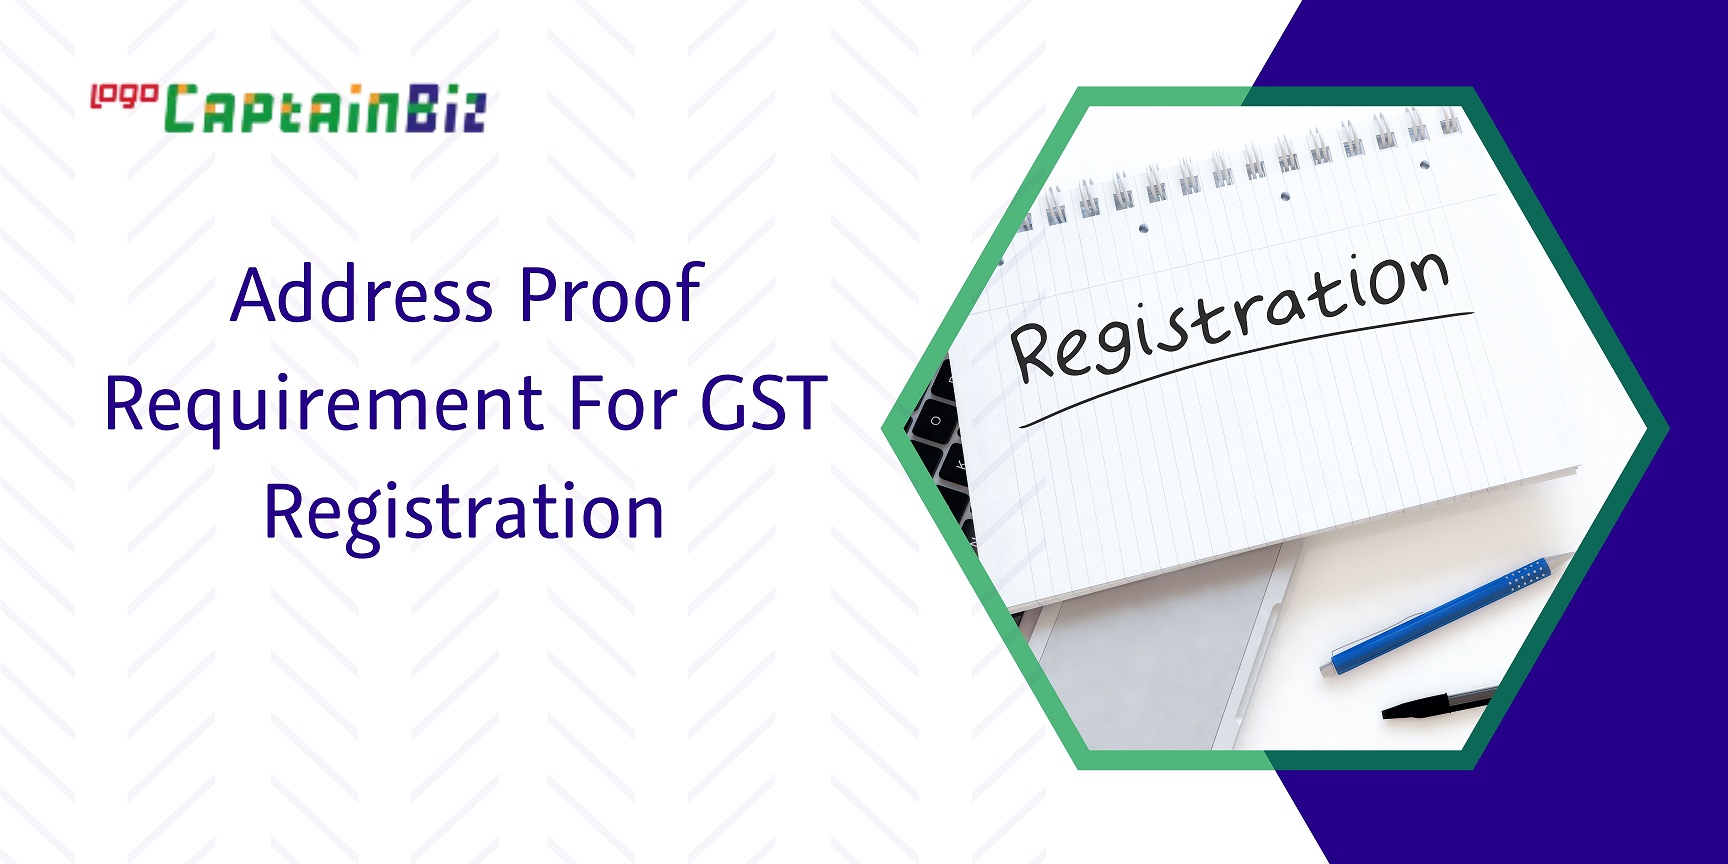 captainbiz address proof requirement for gst registration